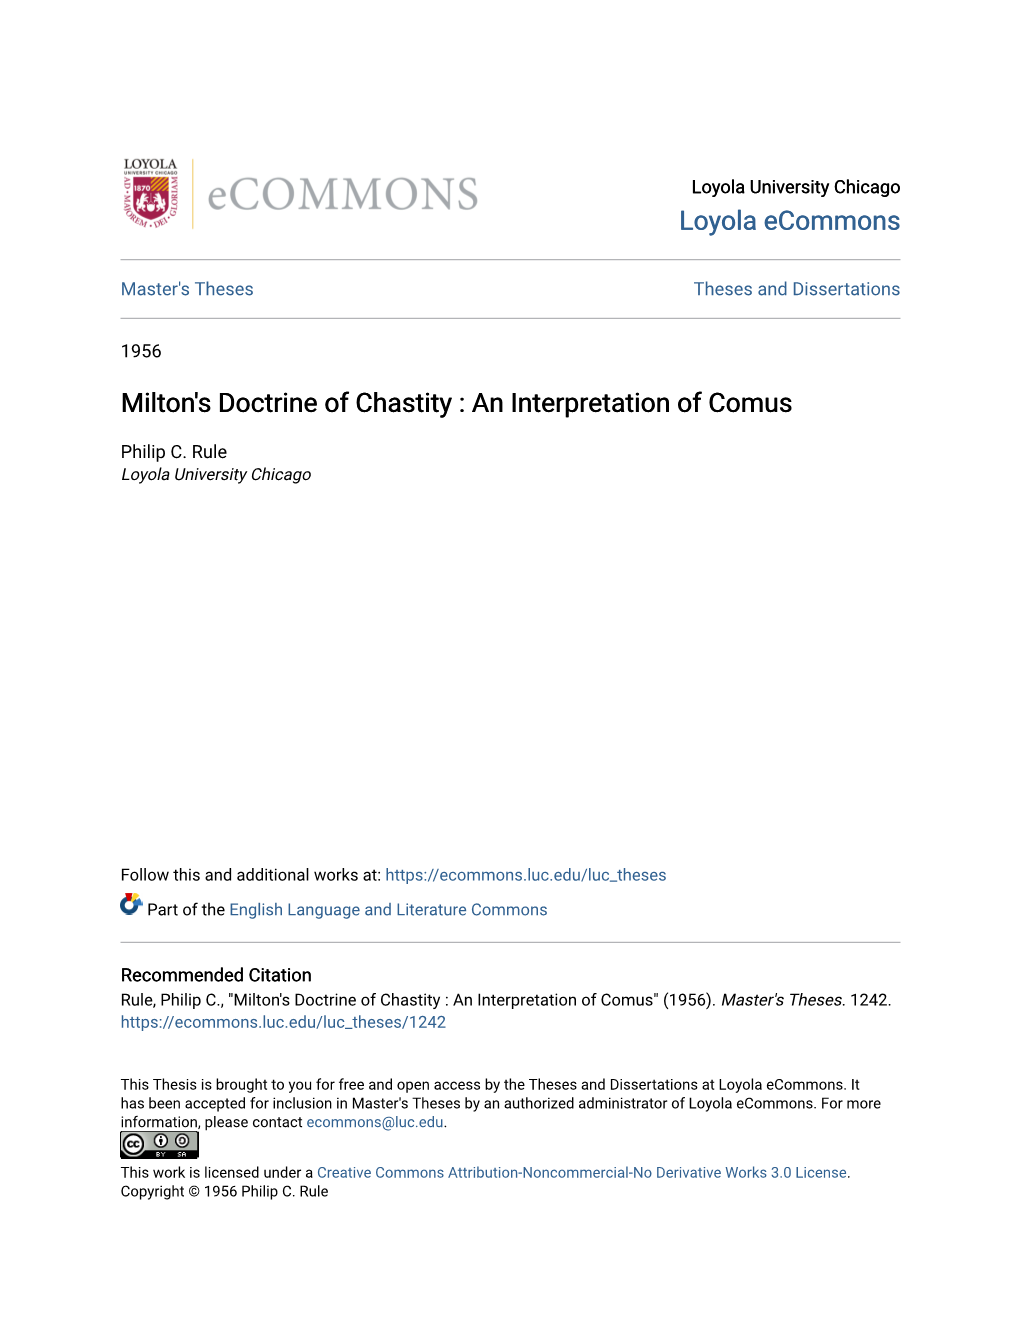 Milton's Doctrine of Chastity : an Interpretation of Comus